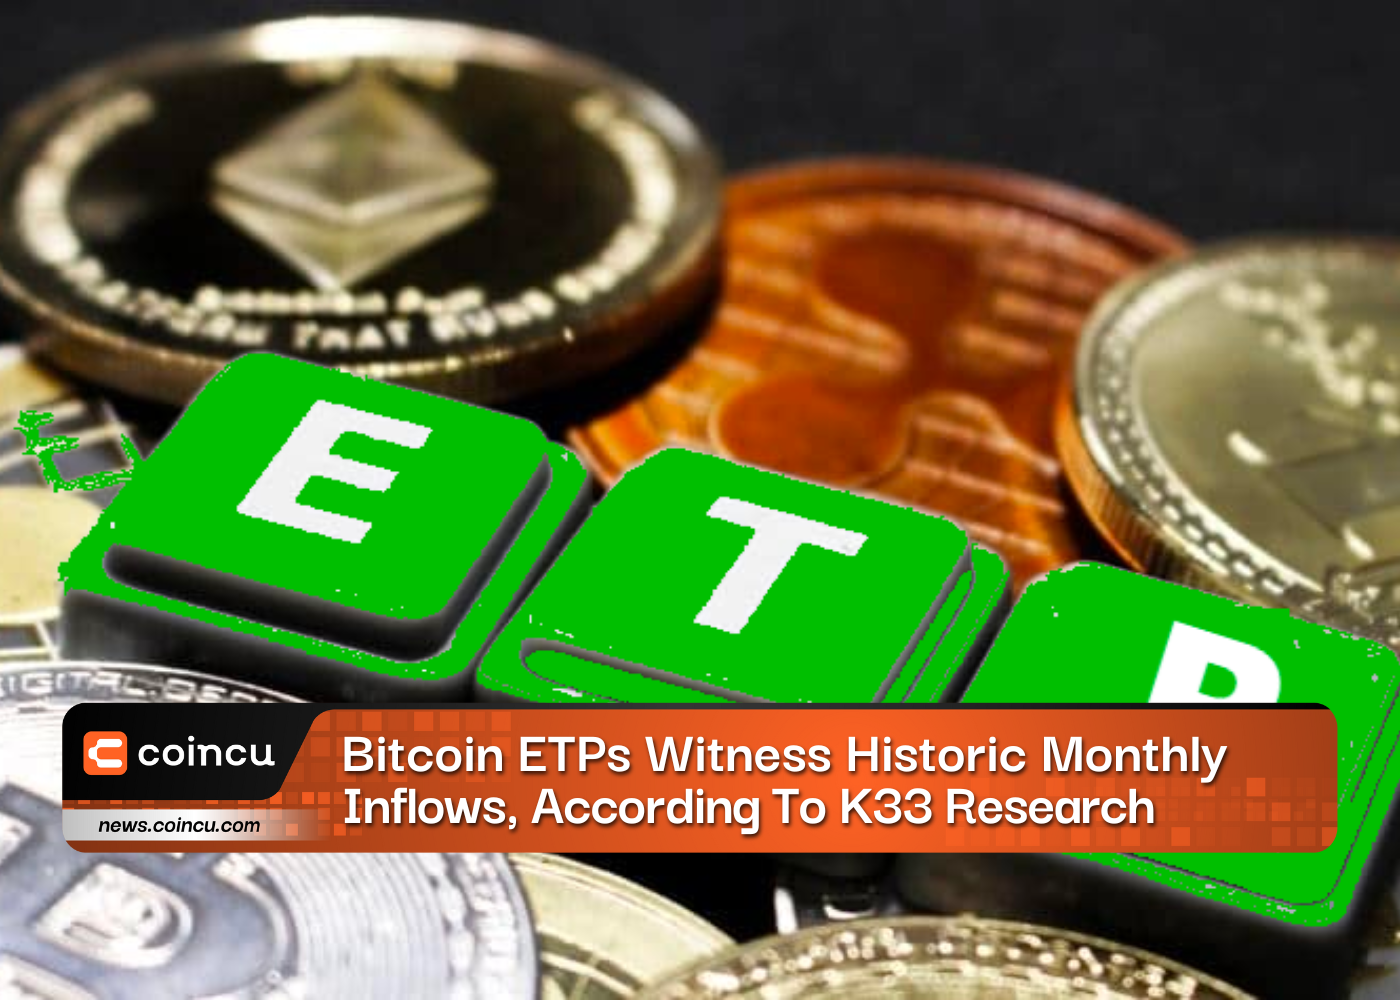 Bitcoin ETPs testemunham histórico mensal